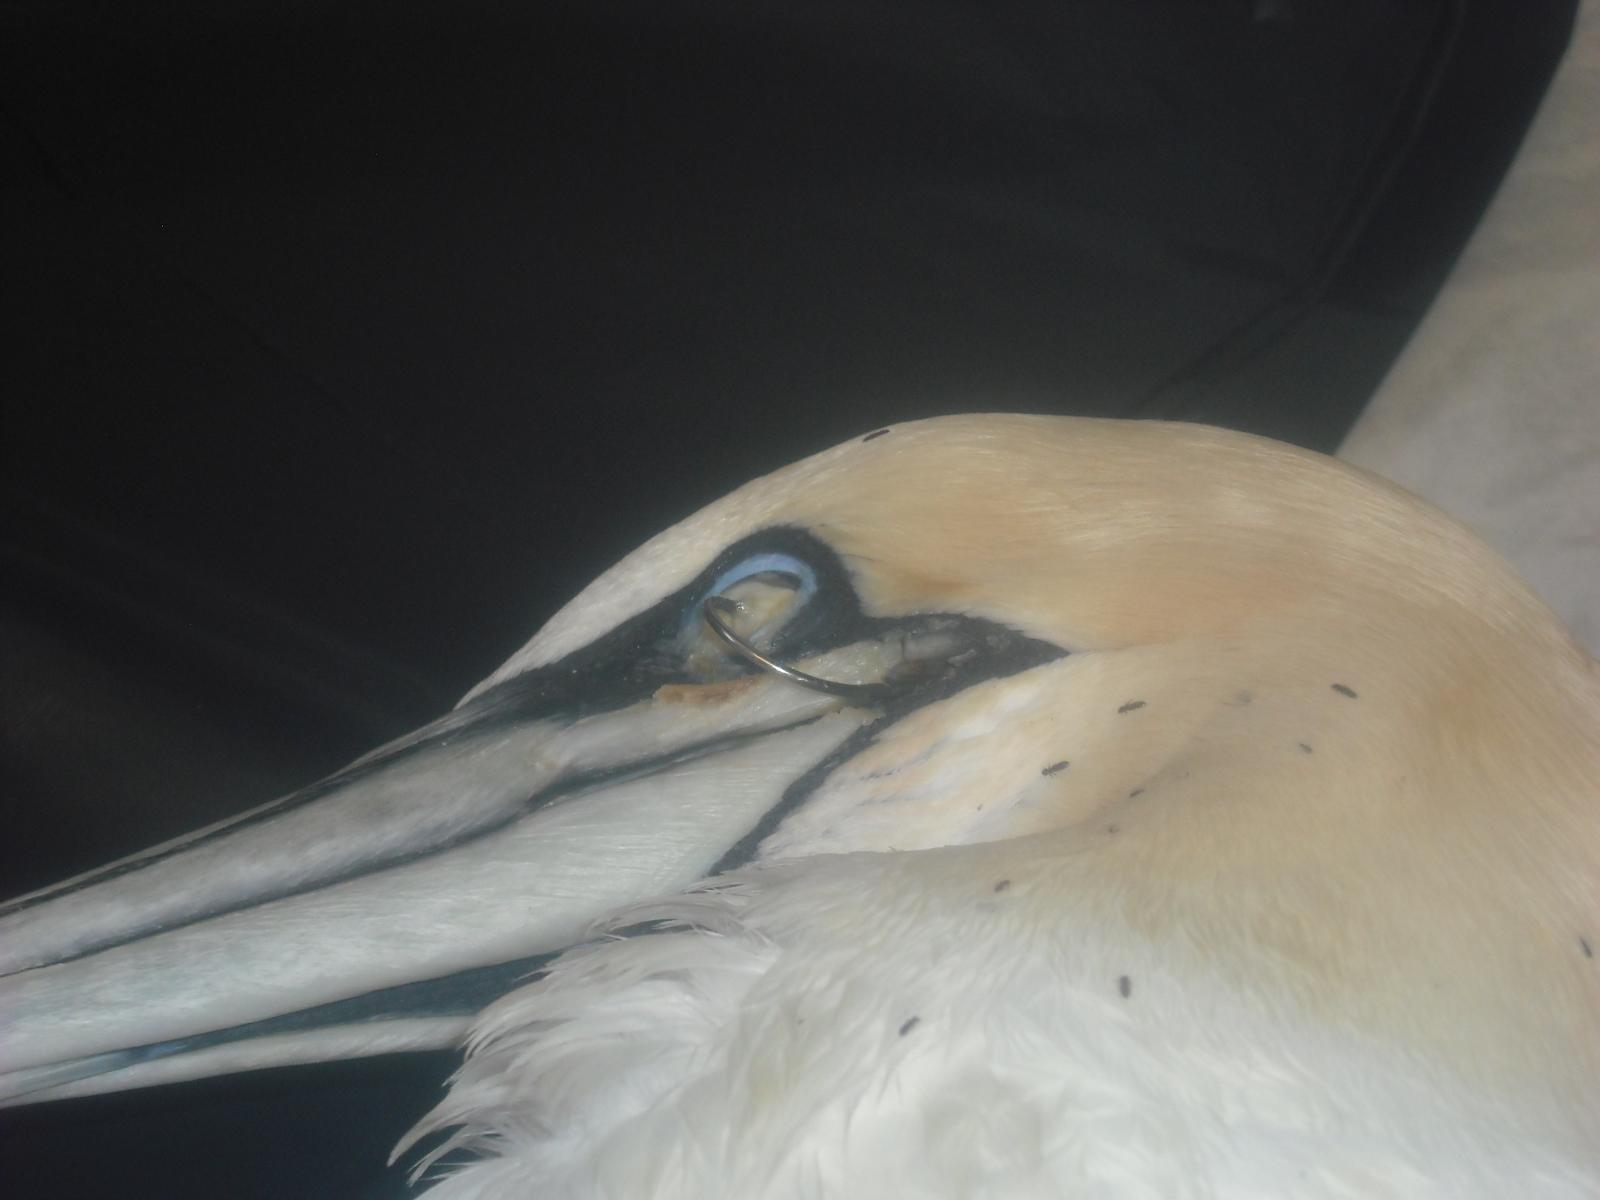 fish hook injured gannet Guernsey GSPCA seabird